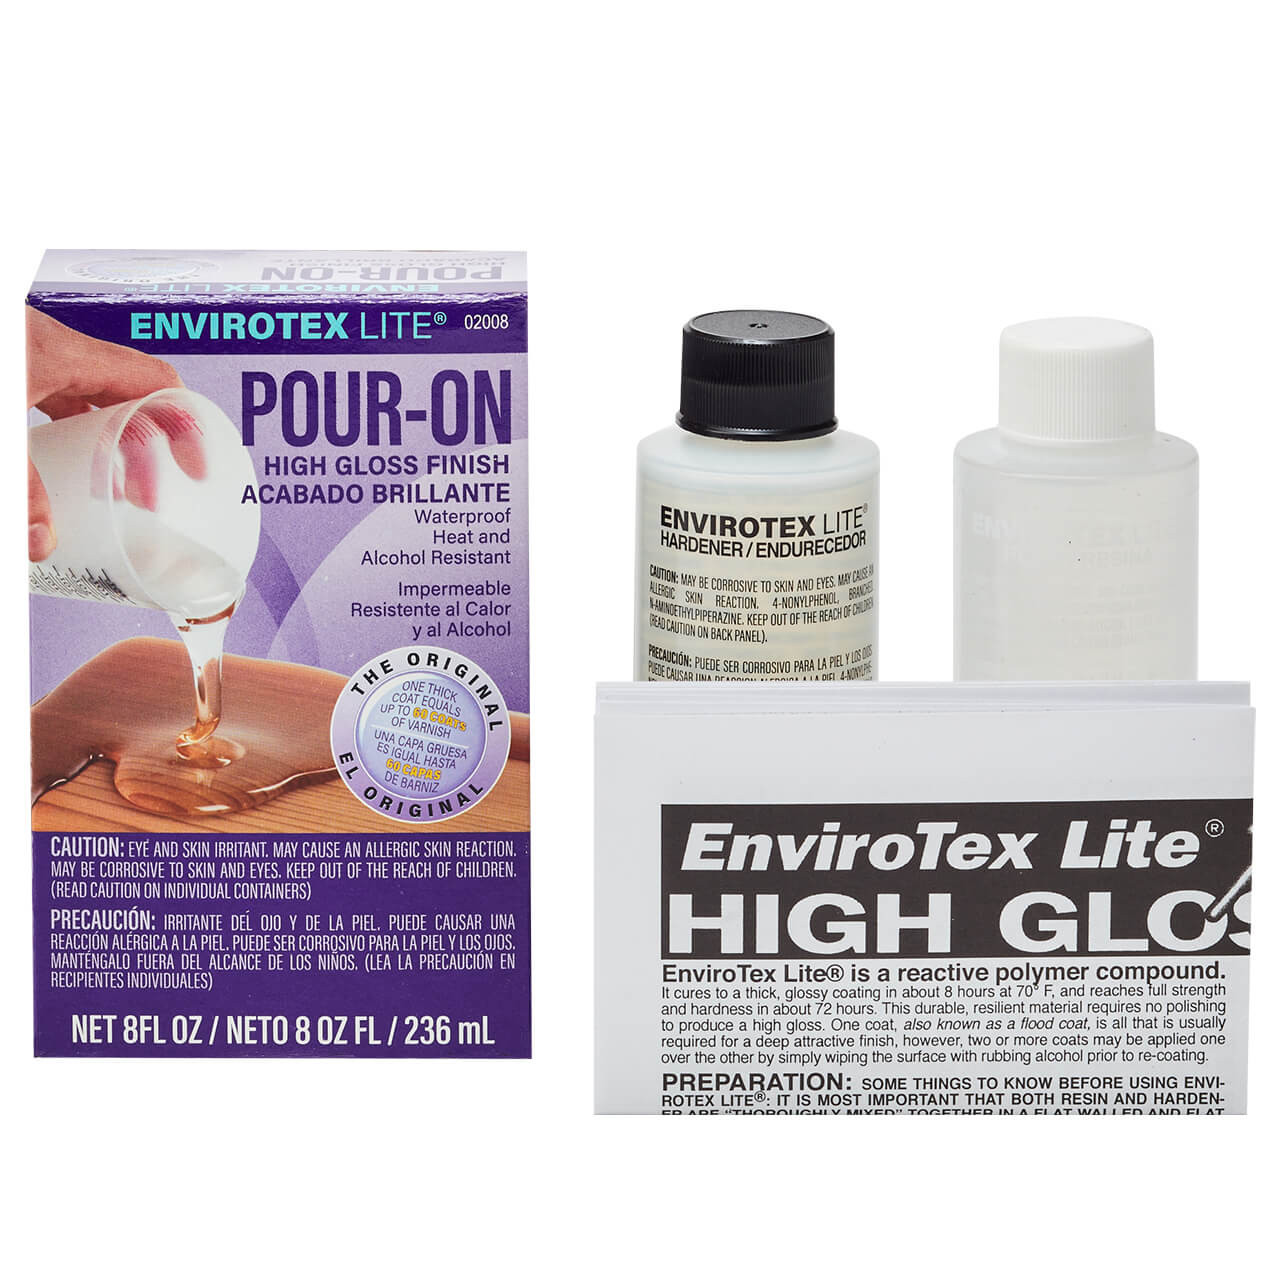 Envirotex Lite Pour-On High Gloss Finish 32 oz. Kit